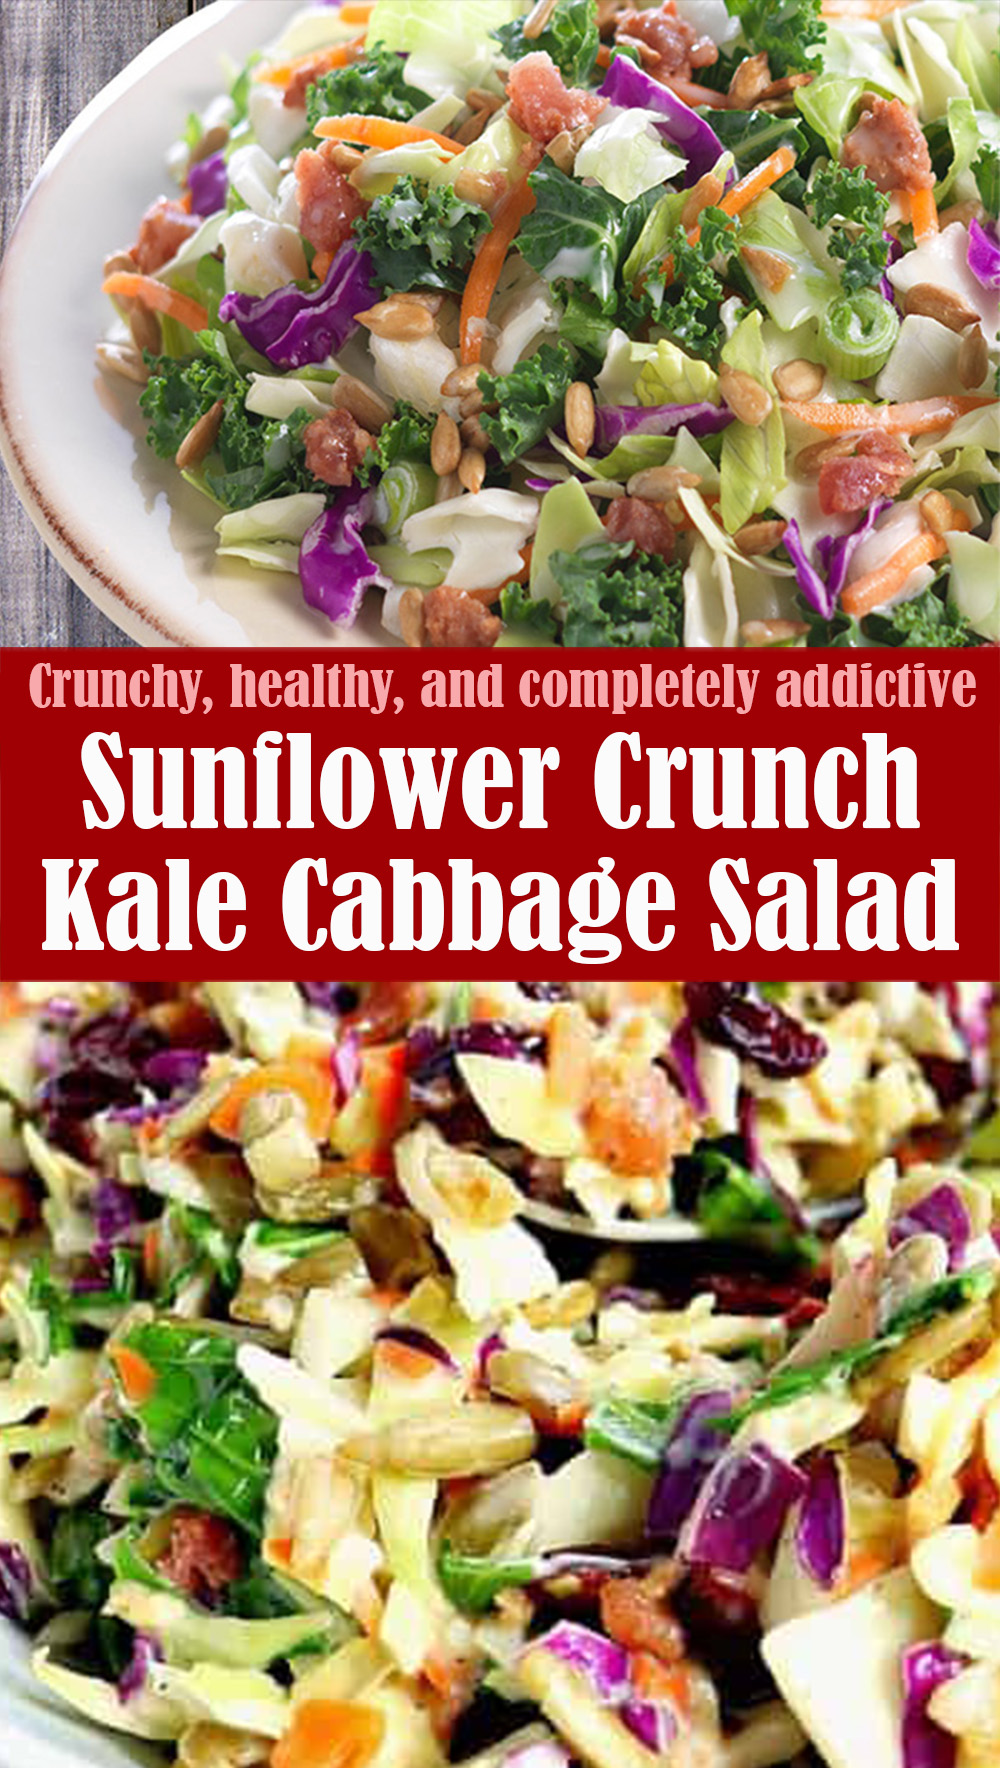 Copycat Sunflower Crunch Kale Cabbage Salad